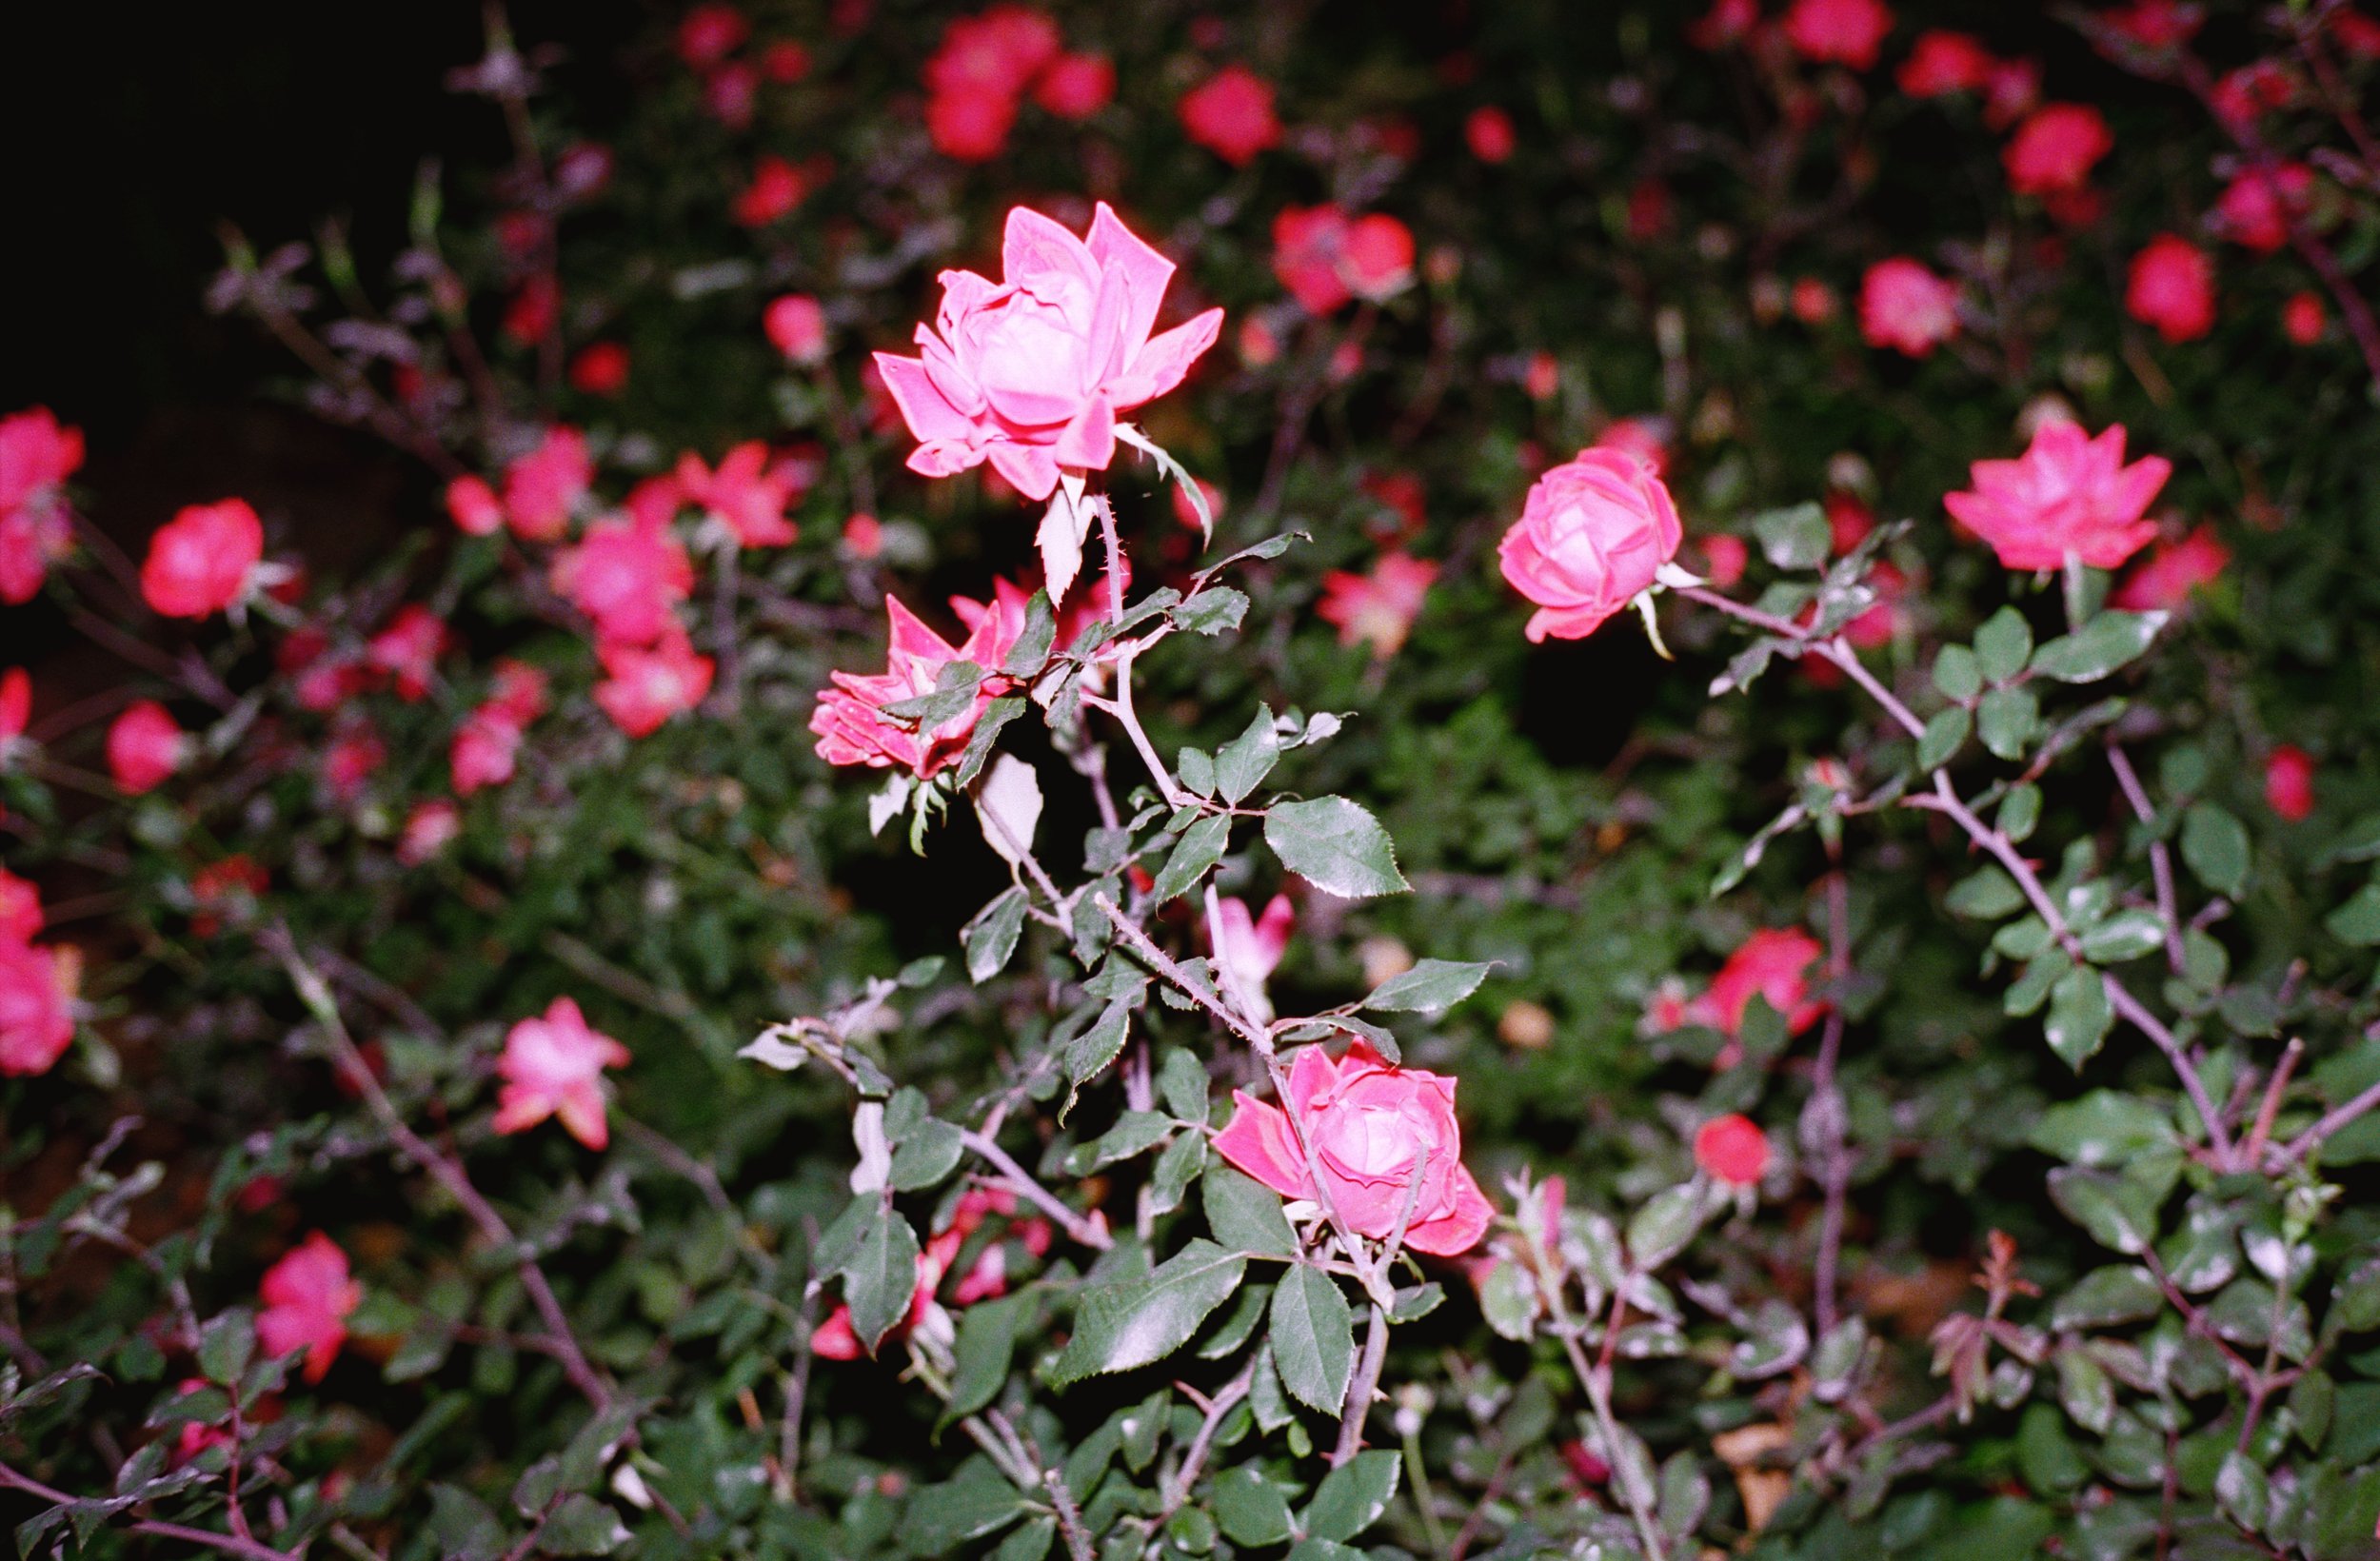 rosebush at astoria park the night we lost suba (suba’s glow), 2020